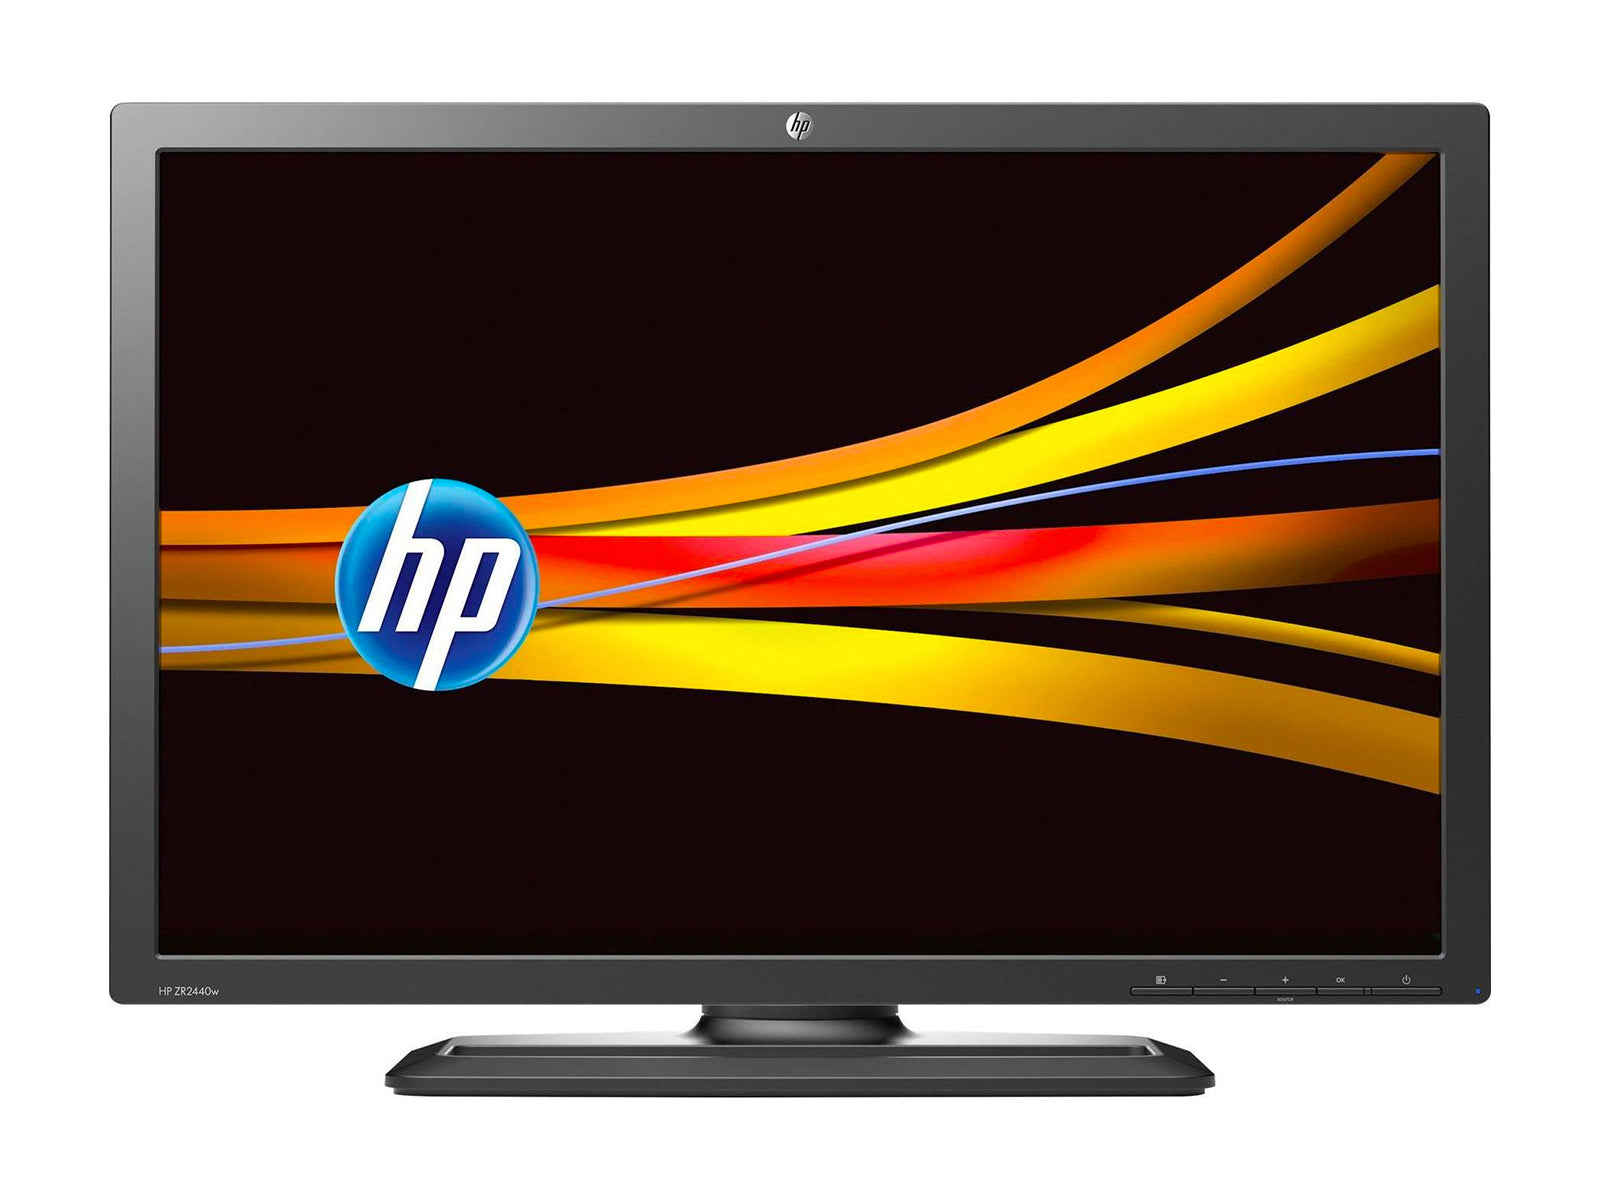 HP ZR2440w 24인치 WUXGA 1920x1200 LED 디스플레이 모니터 (XW477A4#ABA) Monitors.com